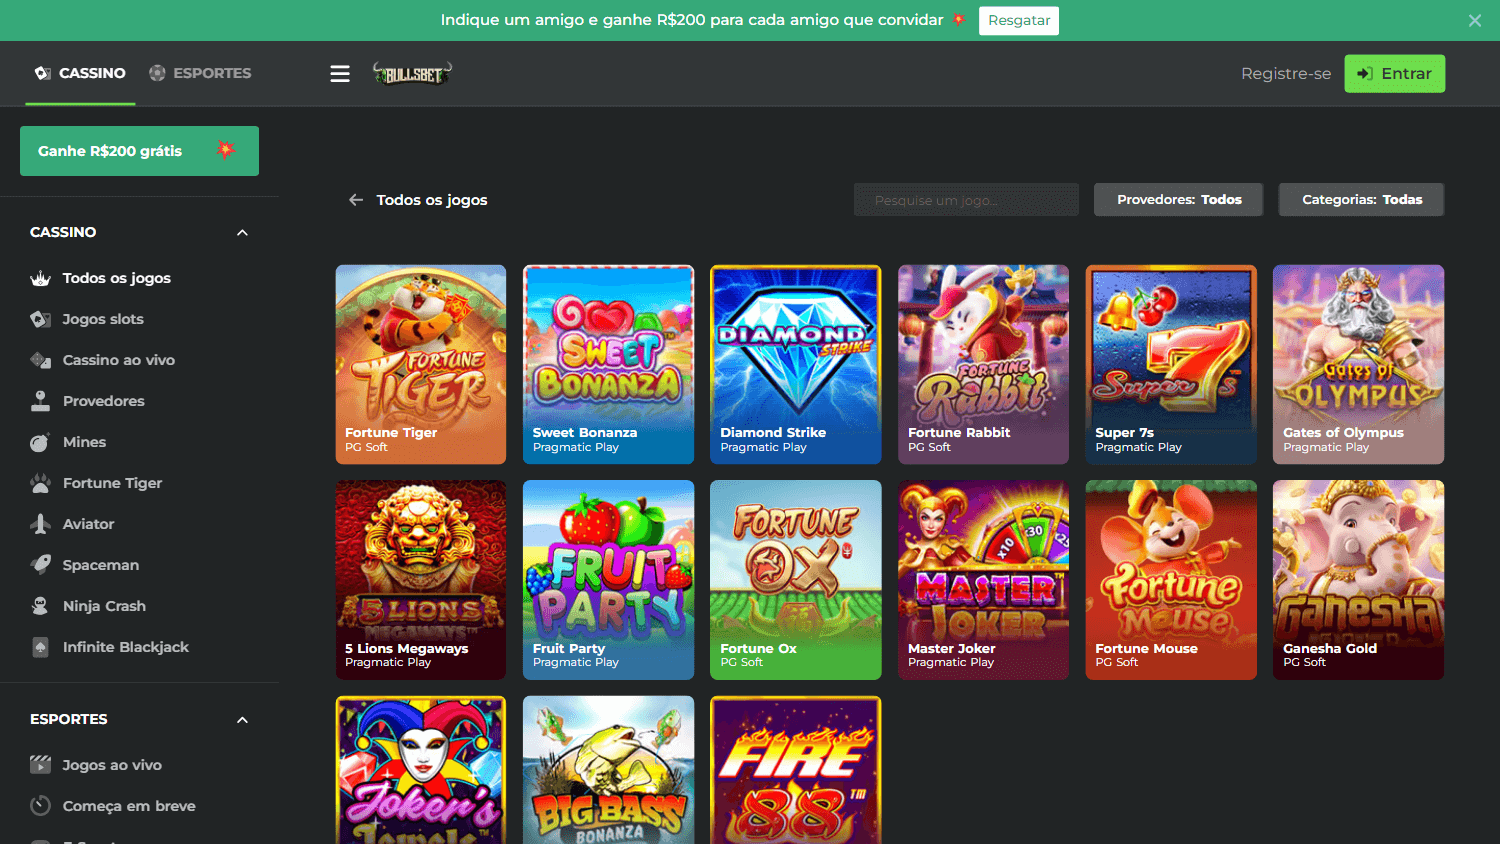 bullsbet.net_casino_game_gallery_desktop